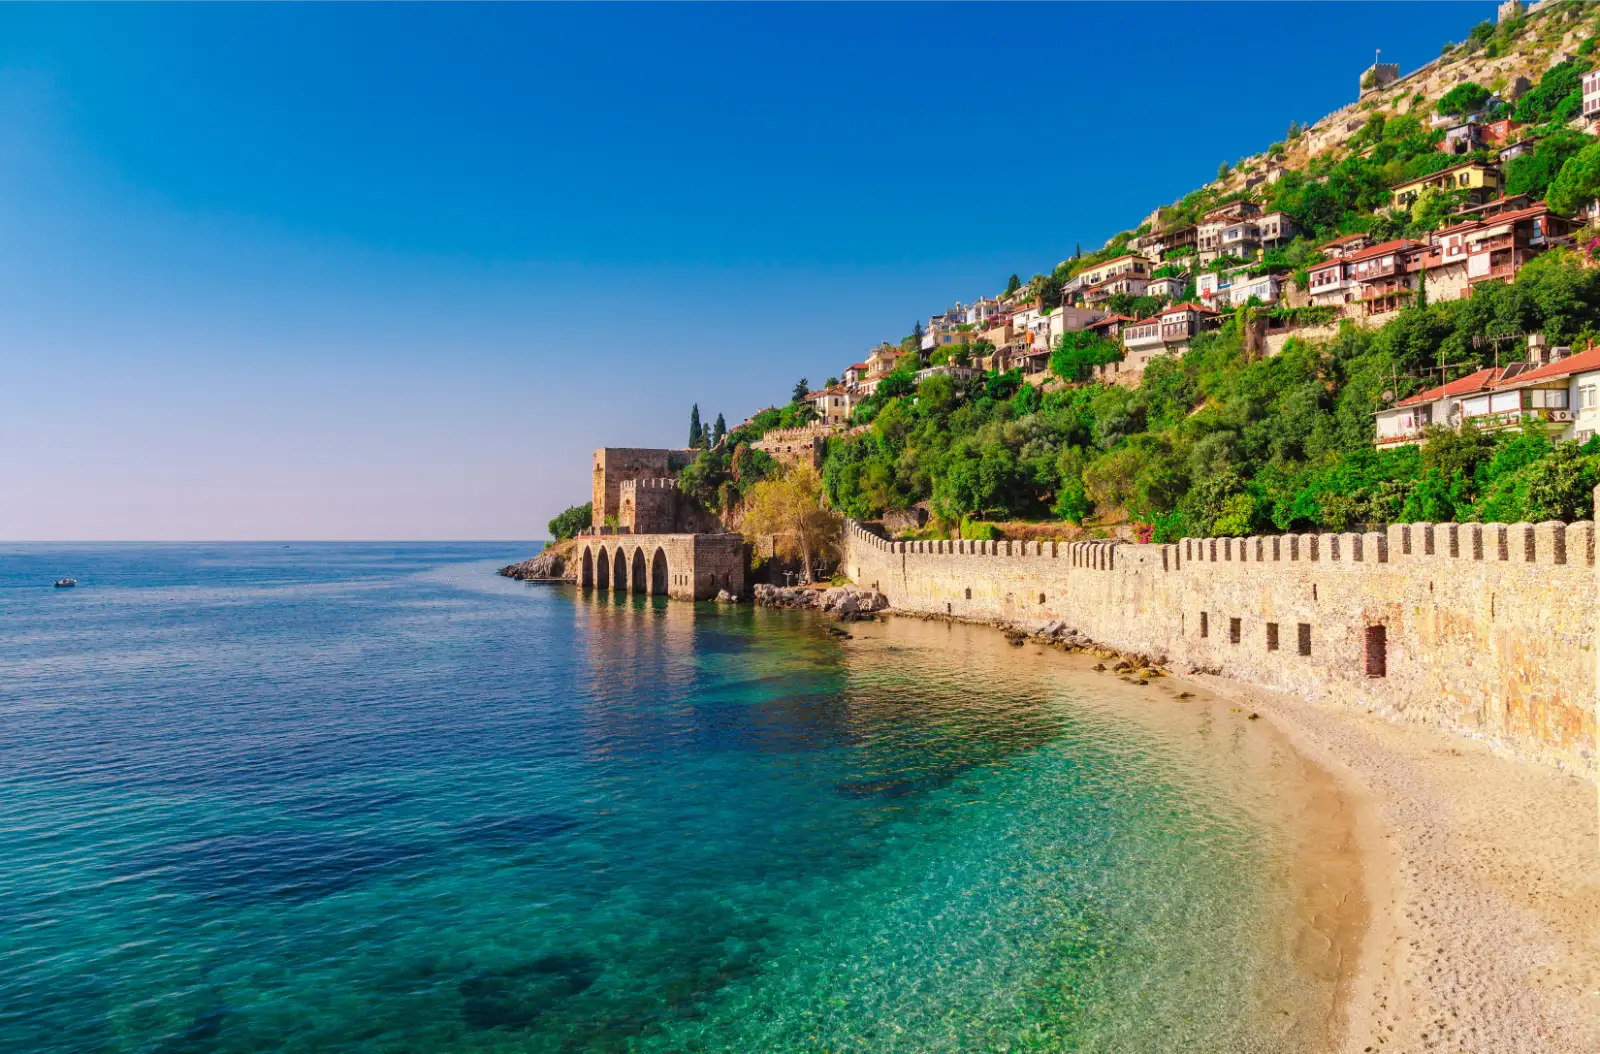 Antalya, Turkey to represent having a Turkish wedding by the Mediterranean sea.